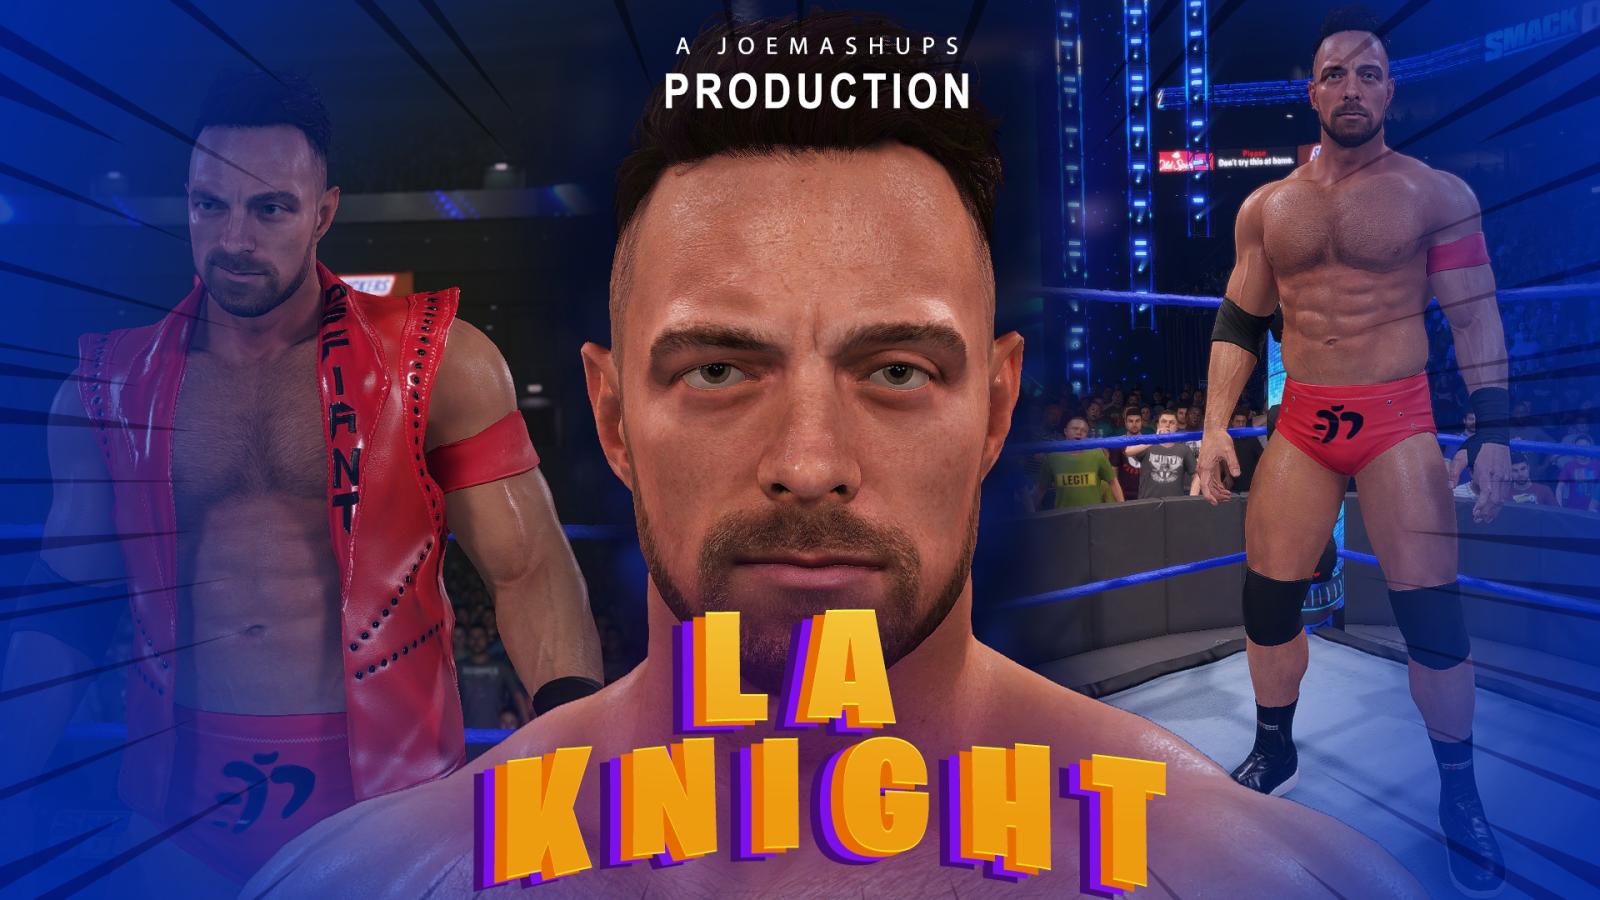 LA Knight 2K19 Mod-Rip (rigged) by DexPac on DeviantArt